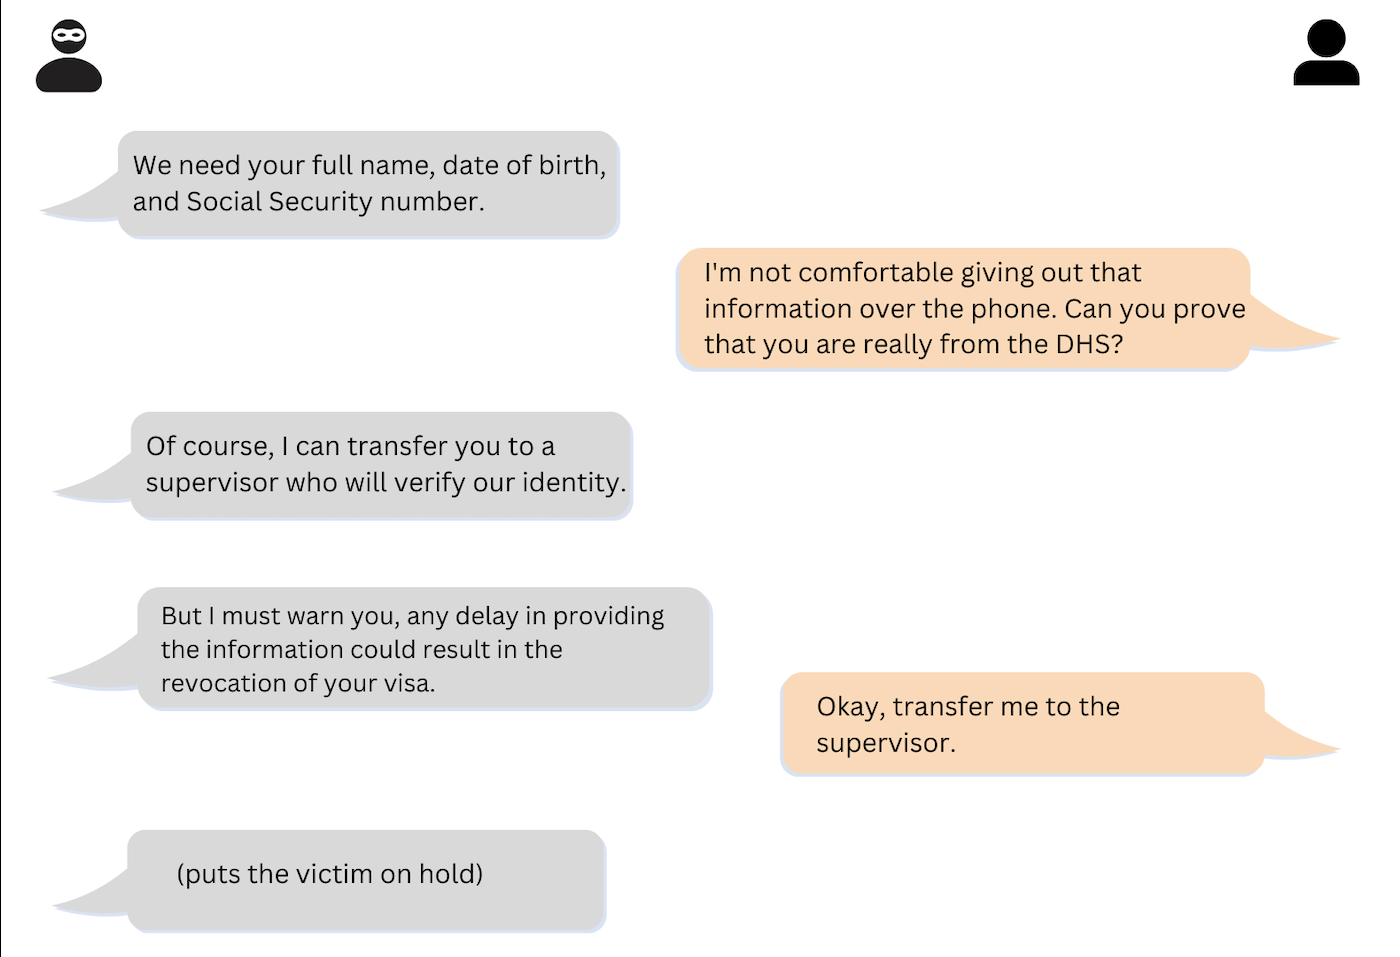 Screenshot of response in SMS conversation